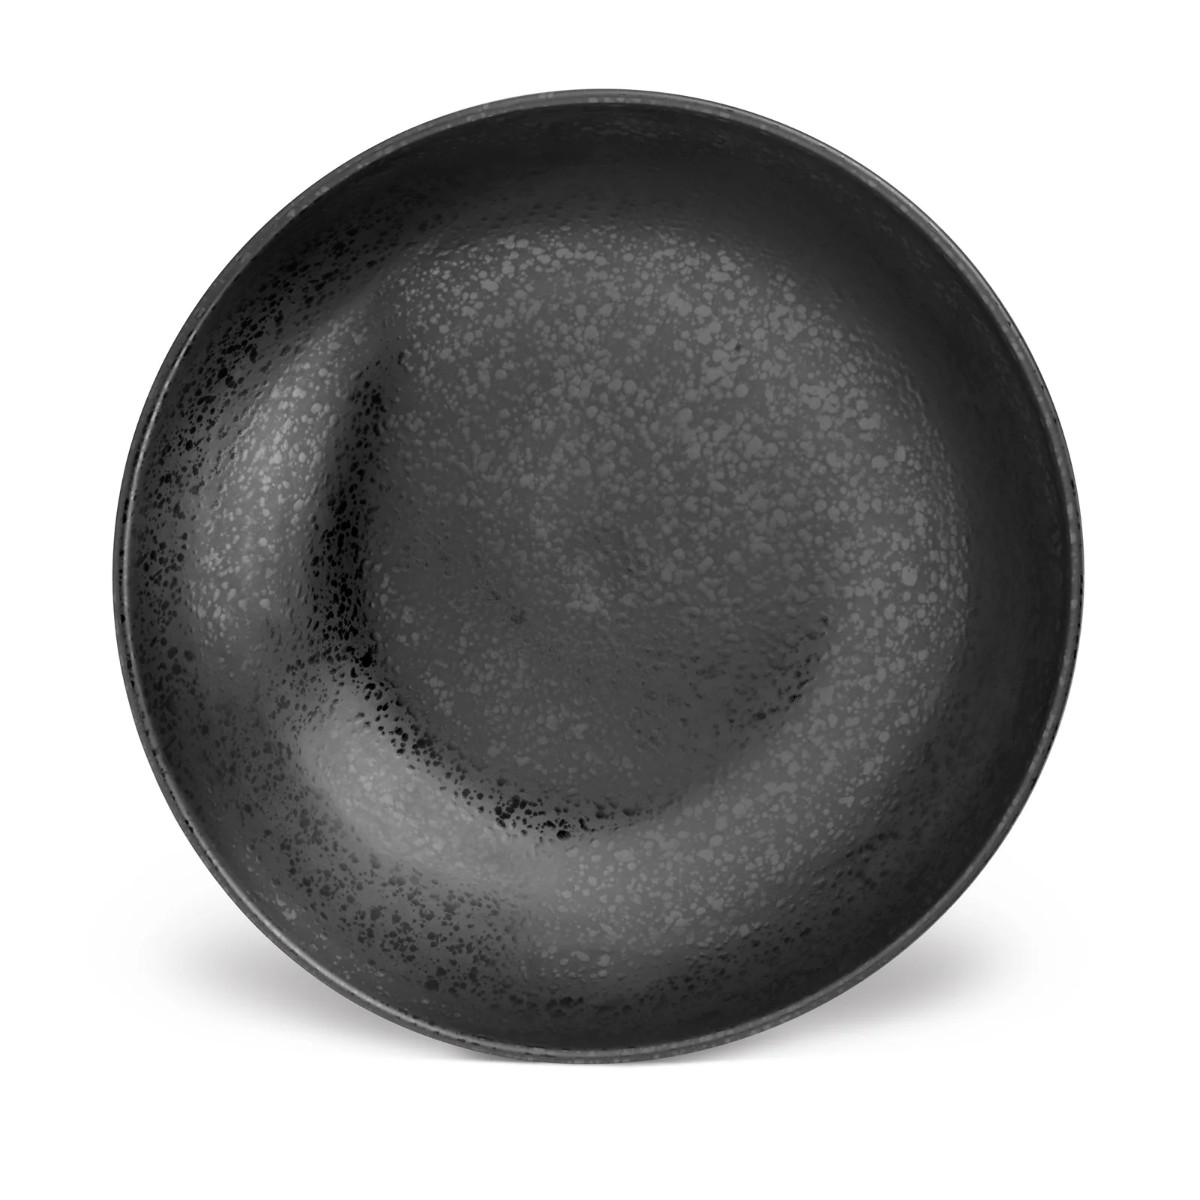 L’Objet | Alchimie Coupe Bowl - Medium | Black